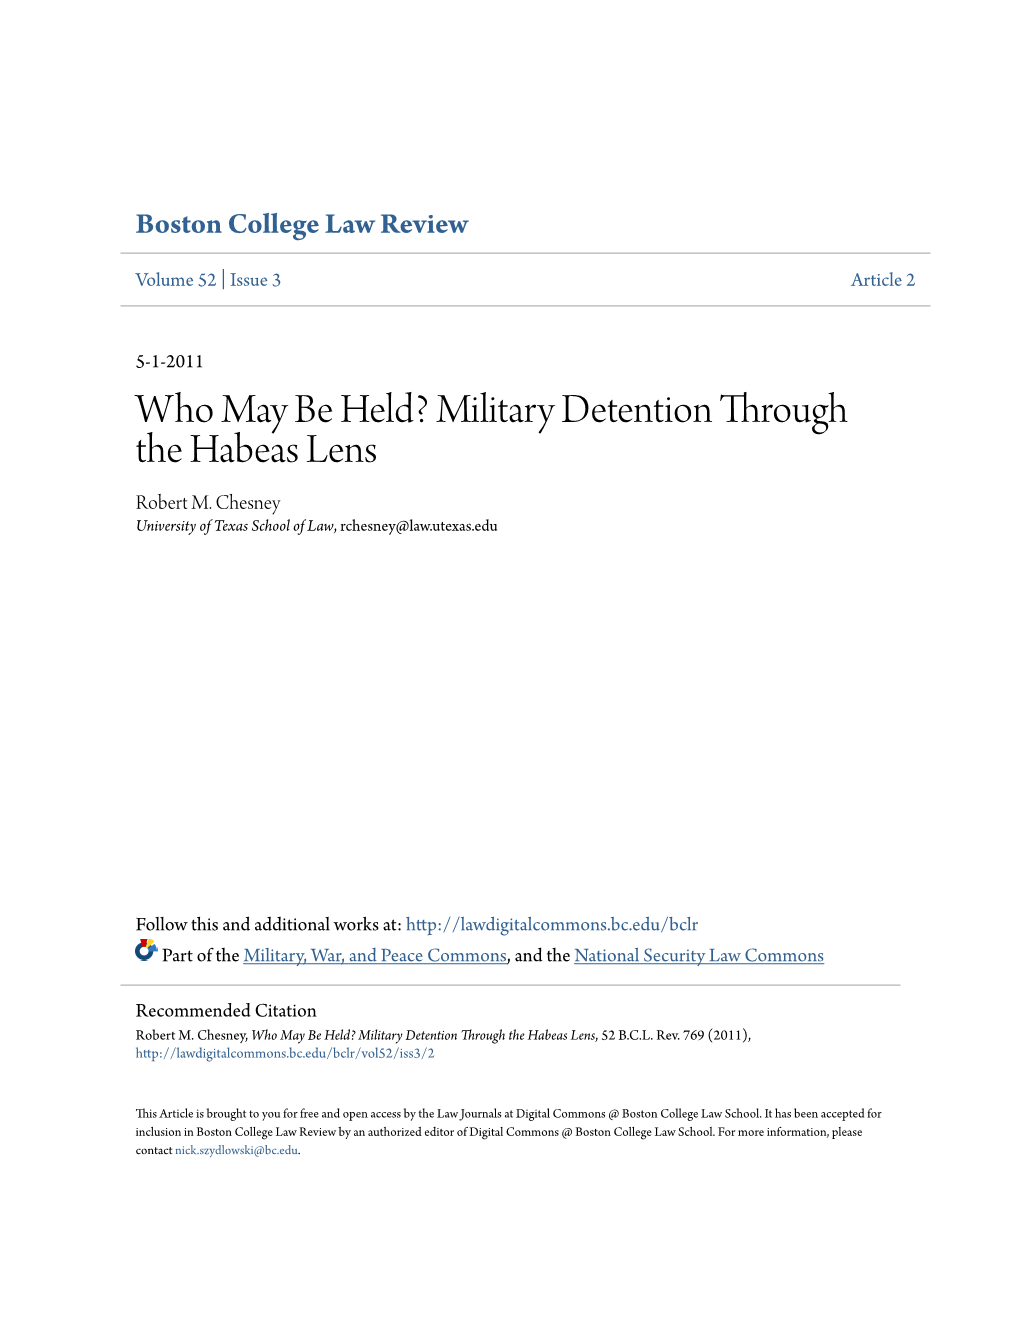 Military Detention Through the Habeas Lens Robert M